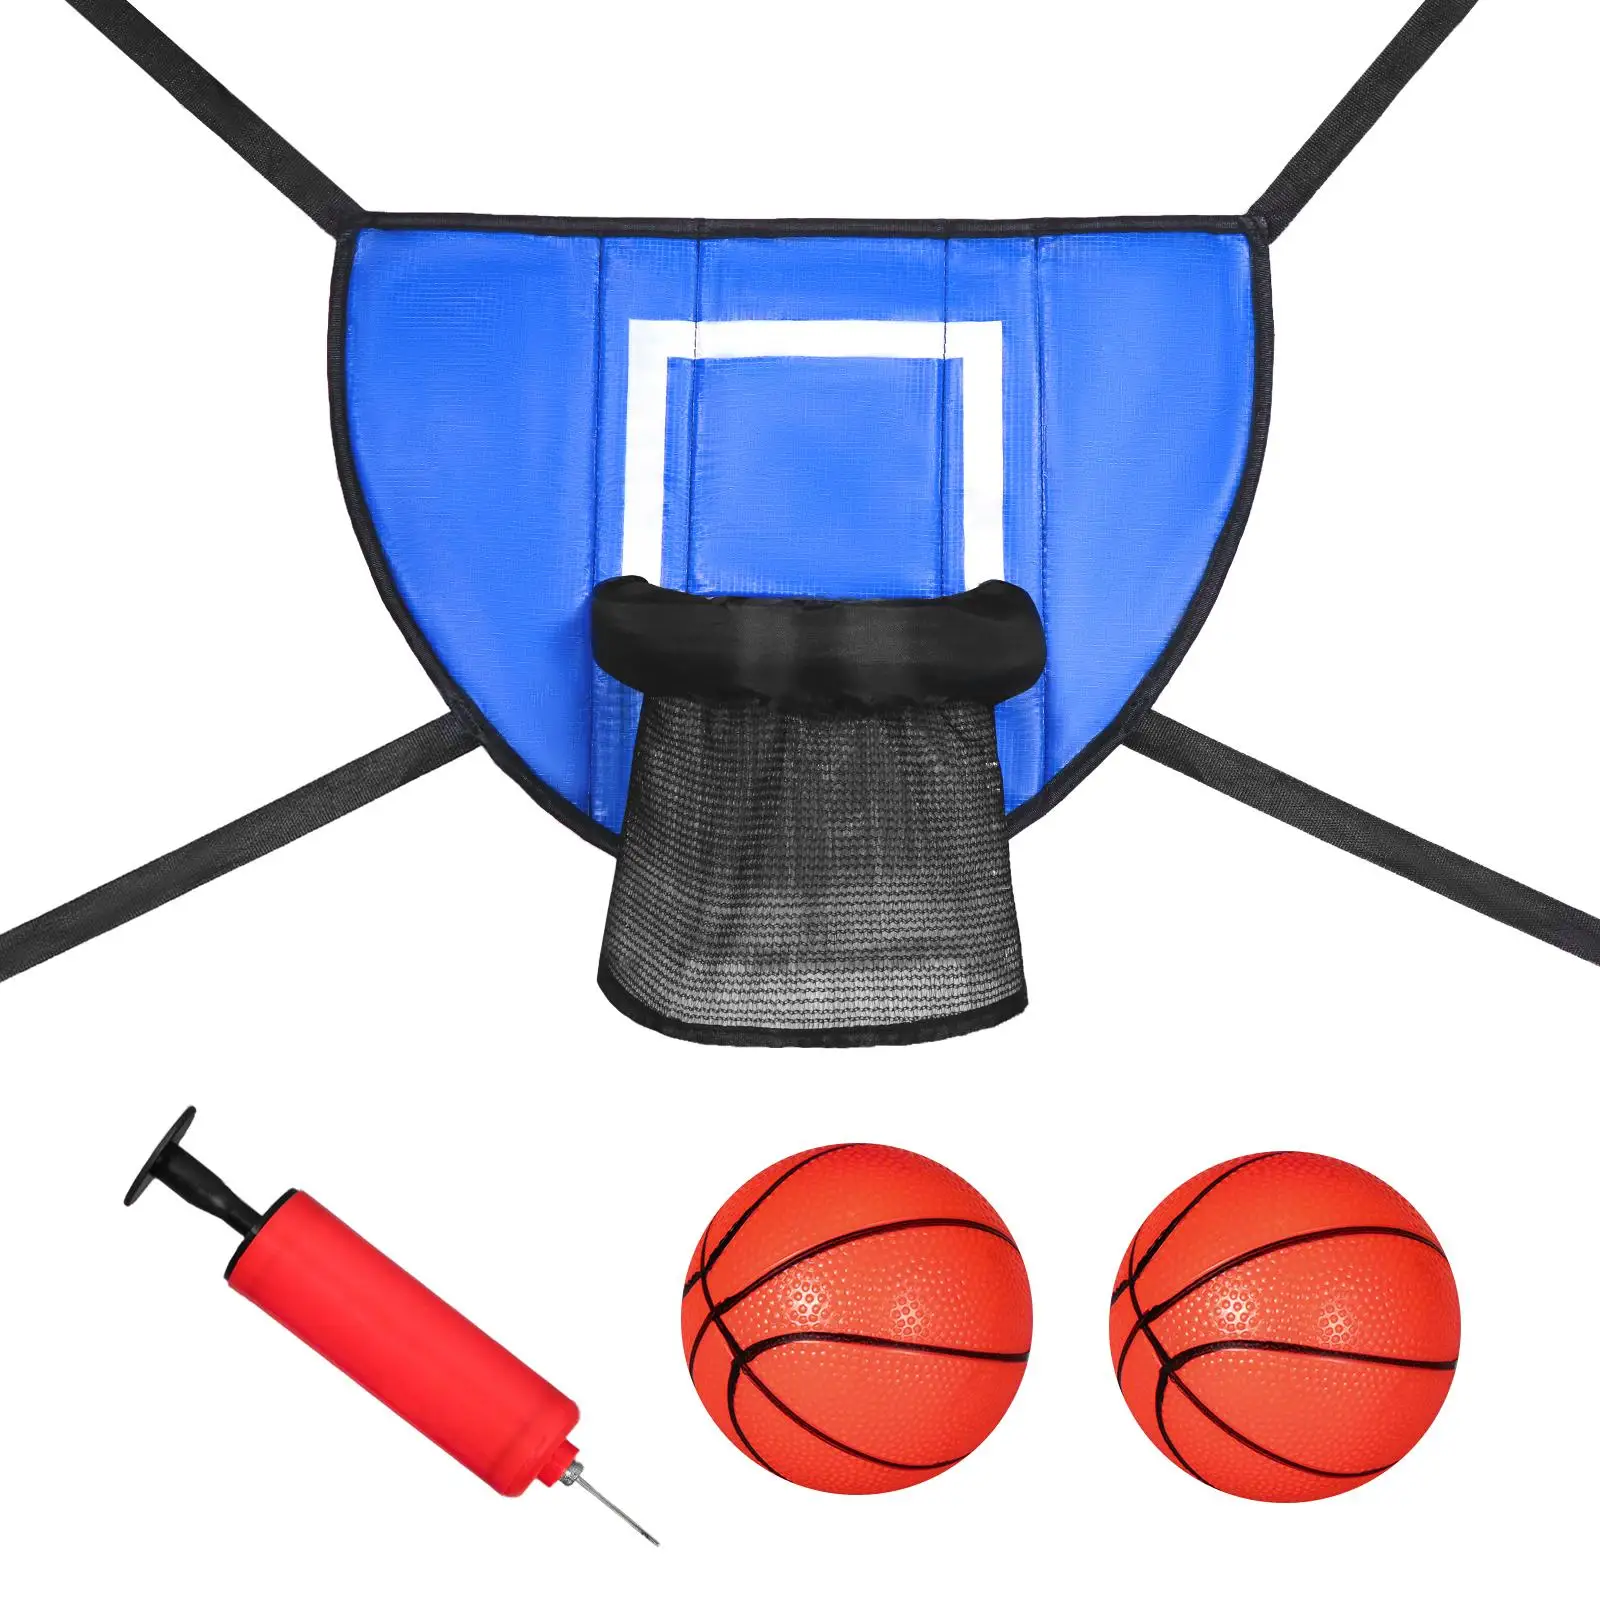 Mini Basketball Hoop for Trampoline Sturdy Universal Basketball Rack Trampoline